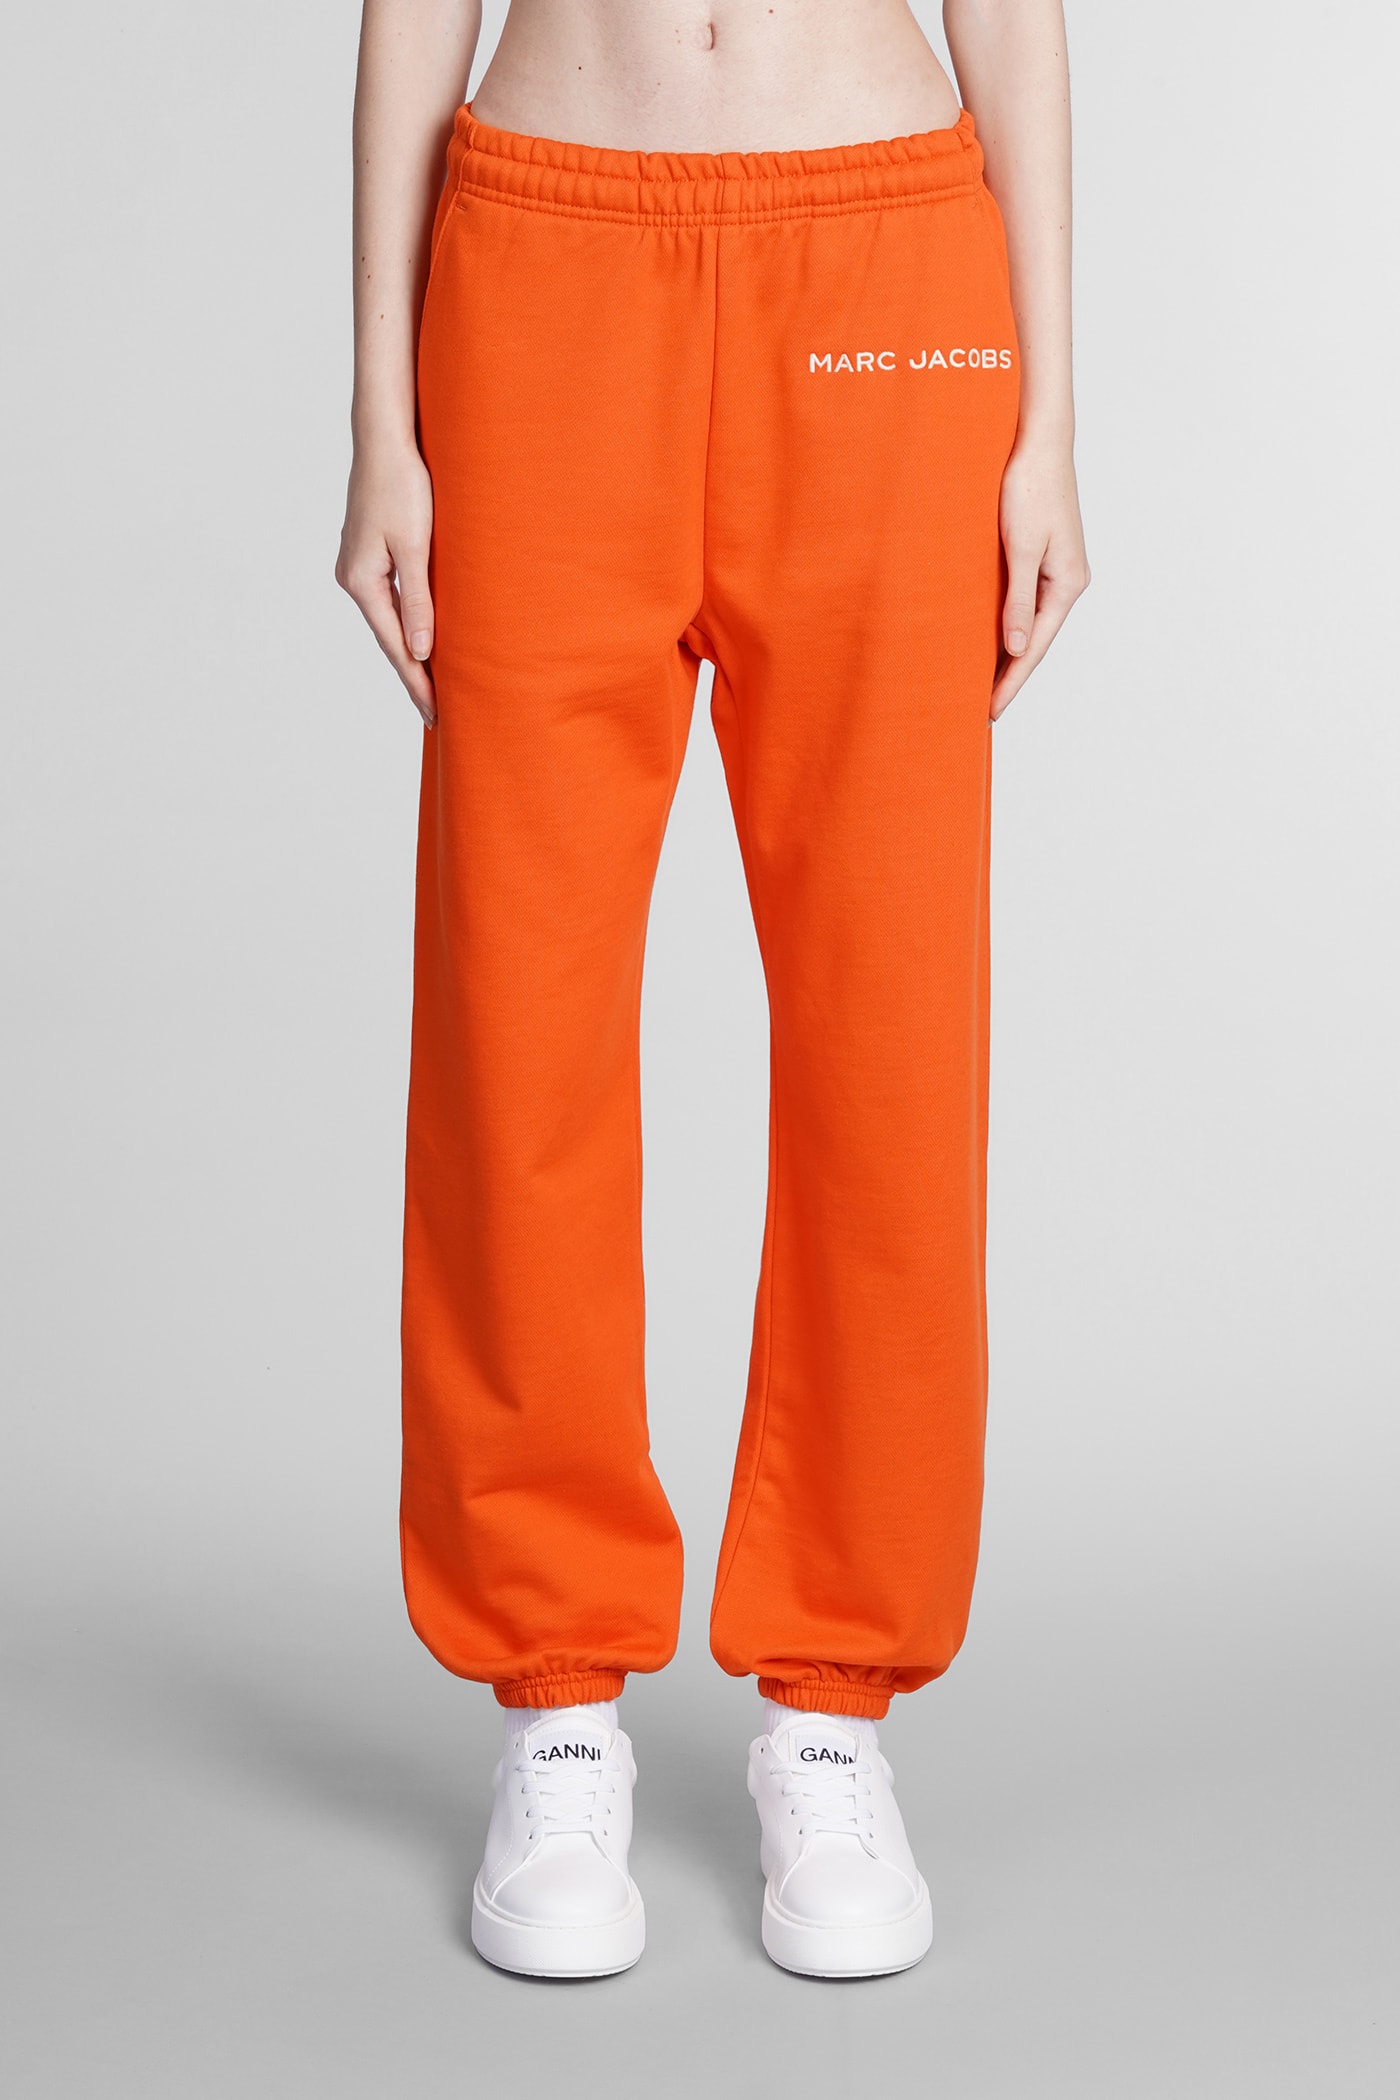 Marc Jacobs Pants In Orange Cotton